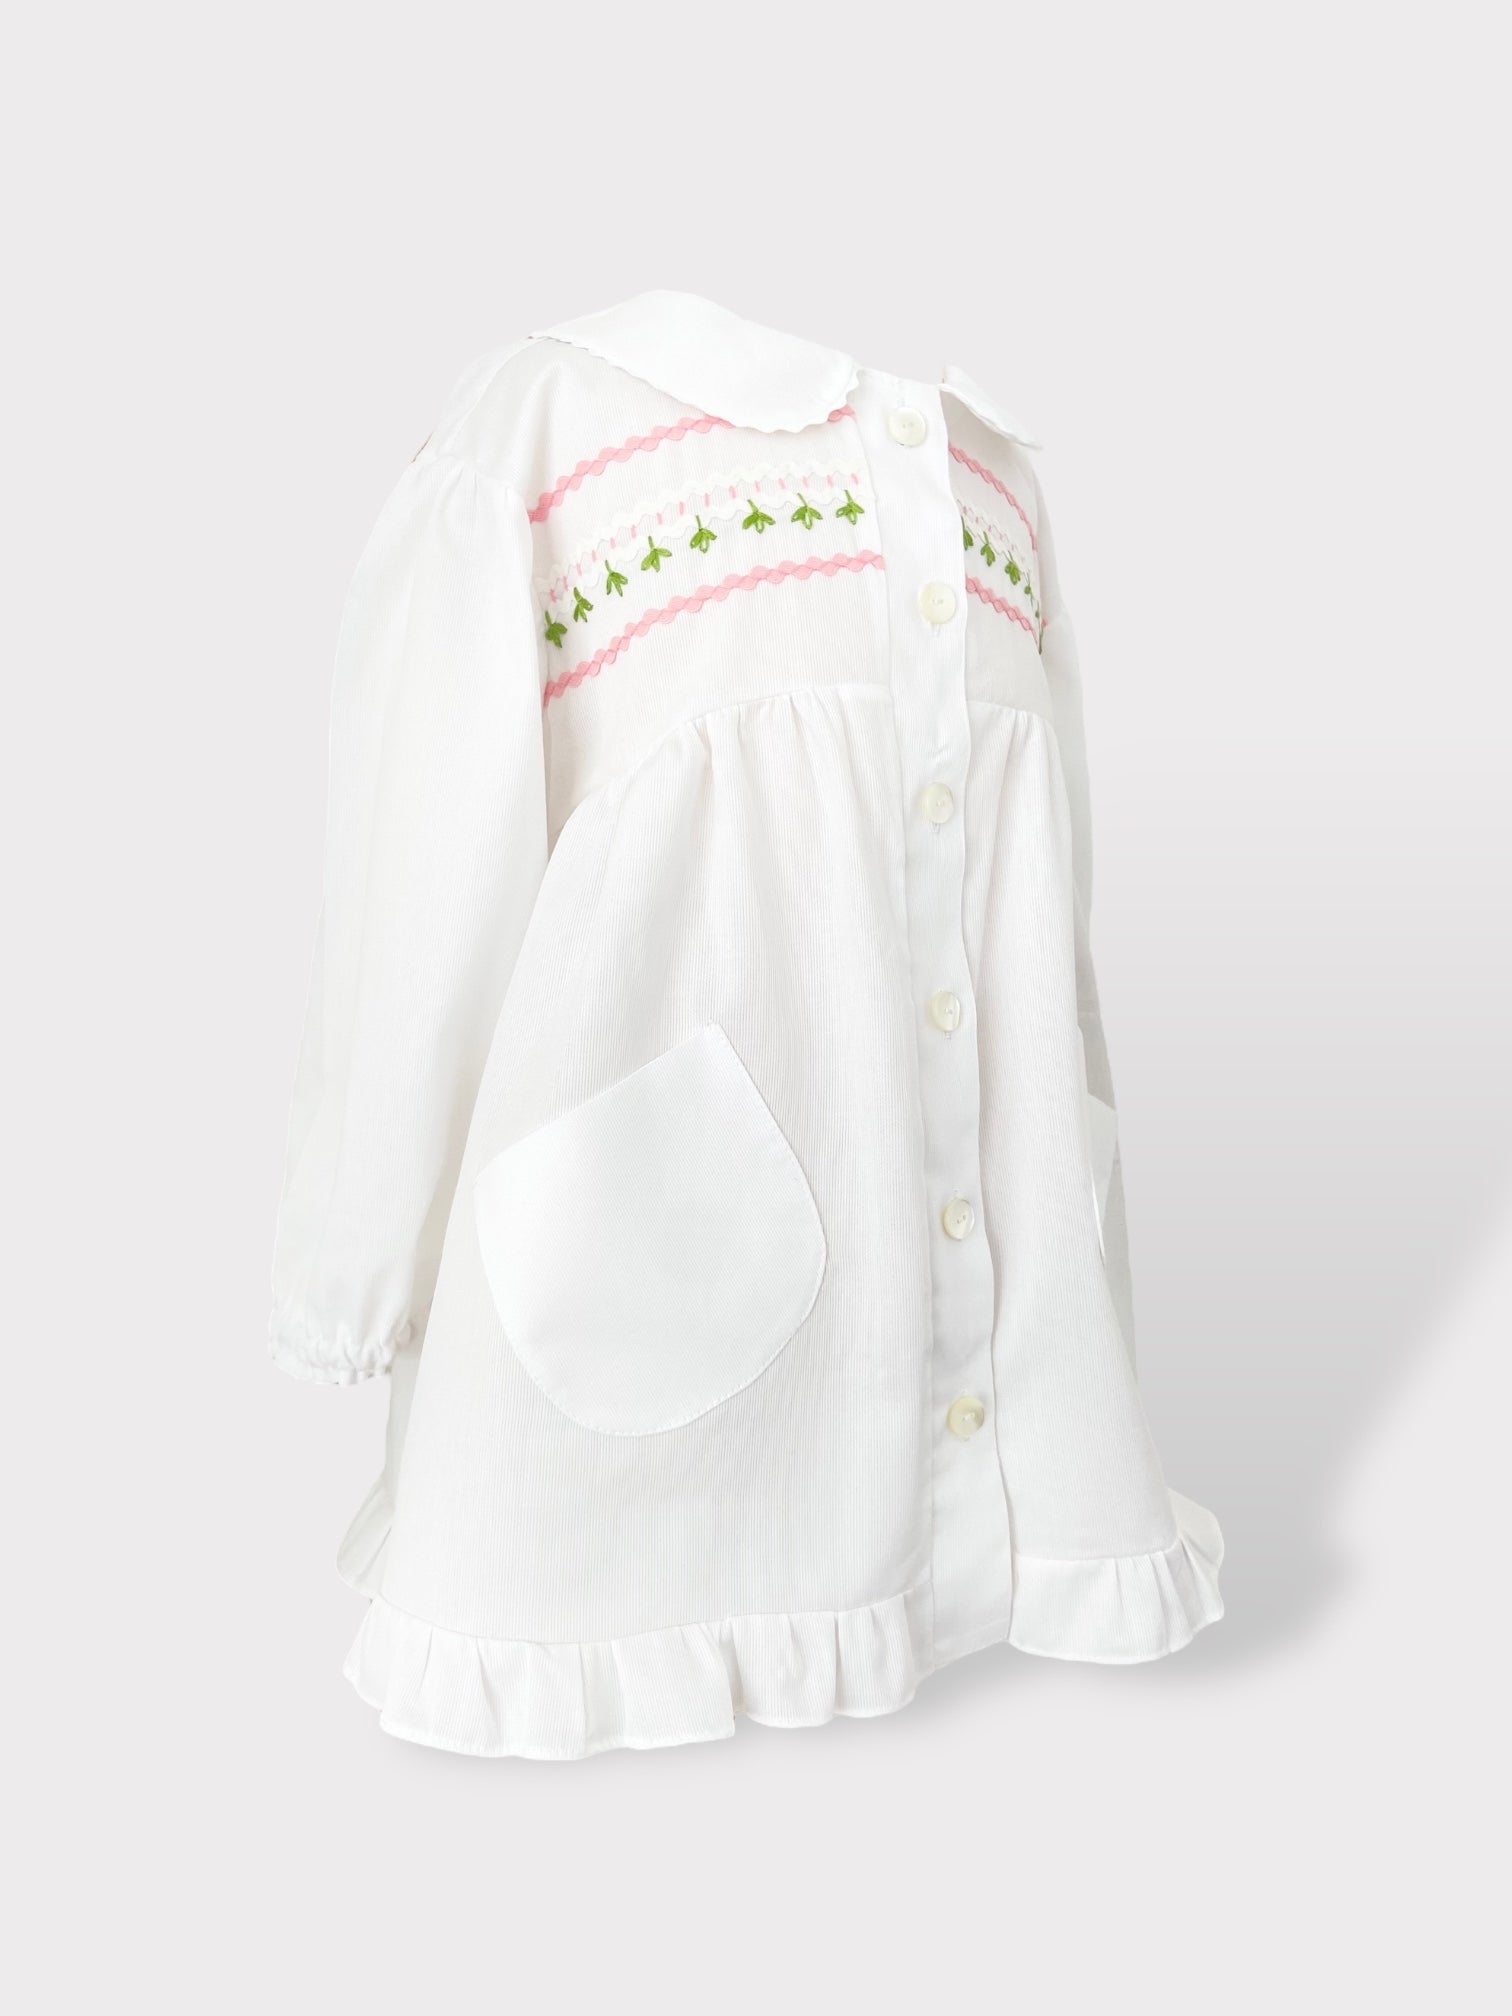 Grembiule Bianco per Bambina Asilo - Cotone  Embroidery Store Letizia –  Embroidery store di Letizia